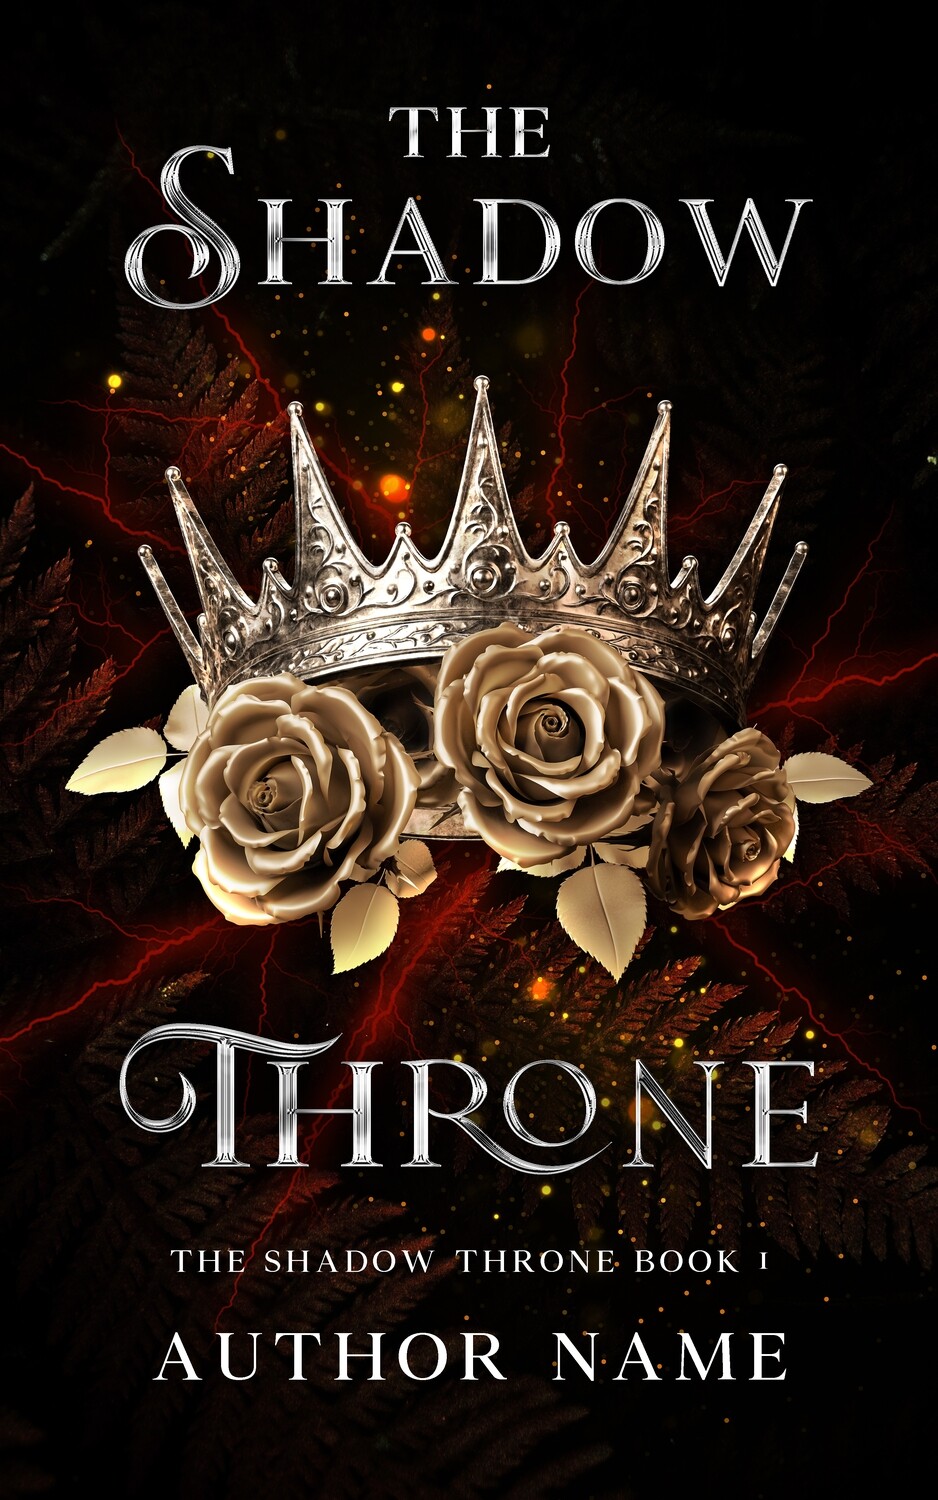 Ebook: The Shadow Throne Trilogy